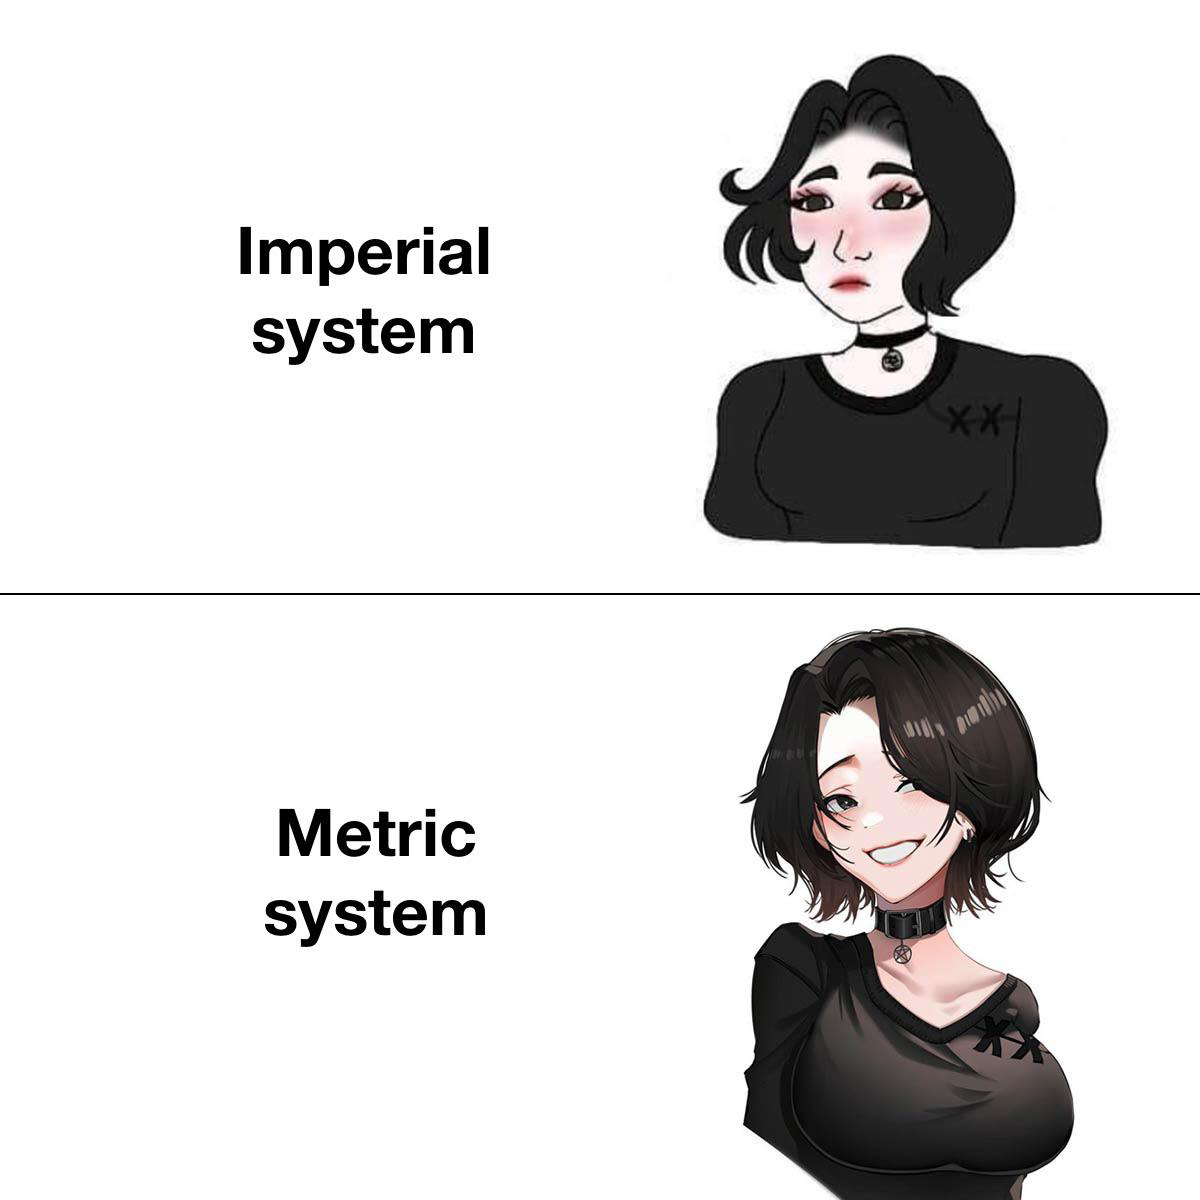 dank memes - funny memes - 123movies meme - Imperial system Metric system Xx